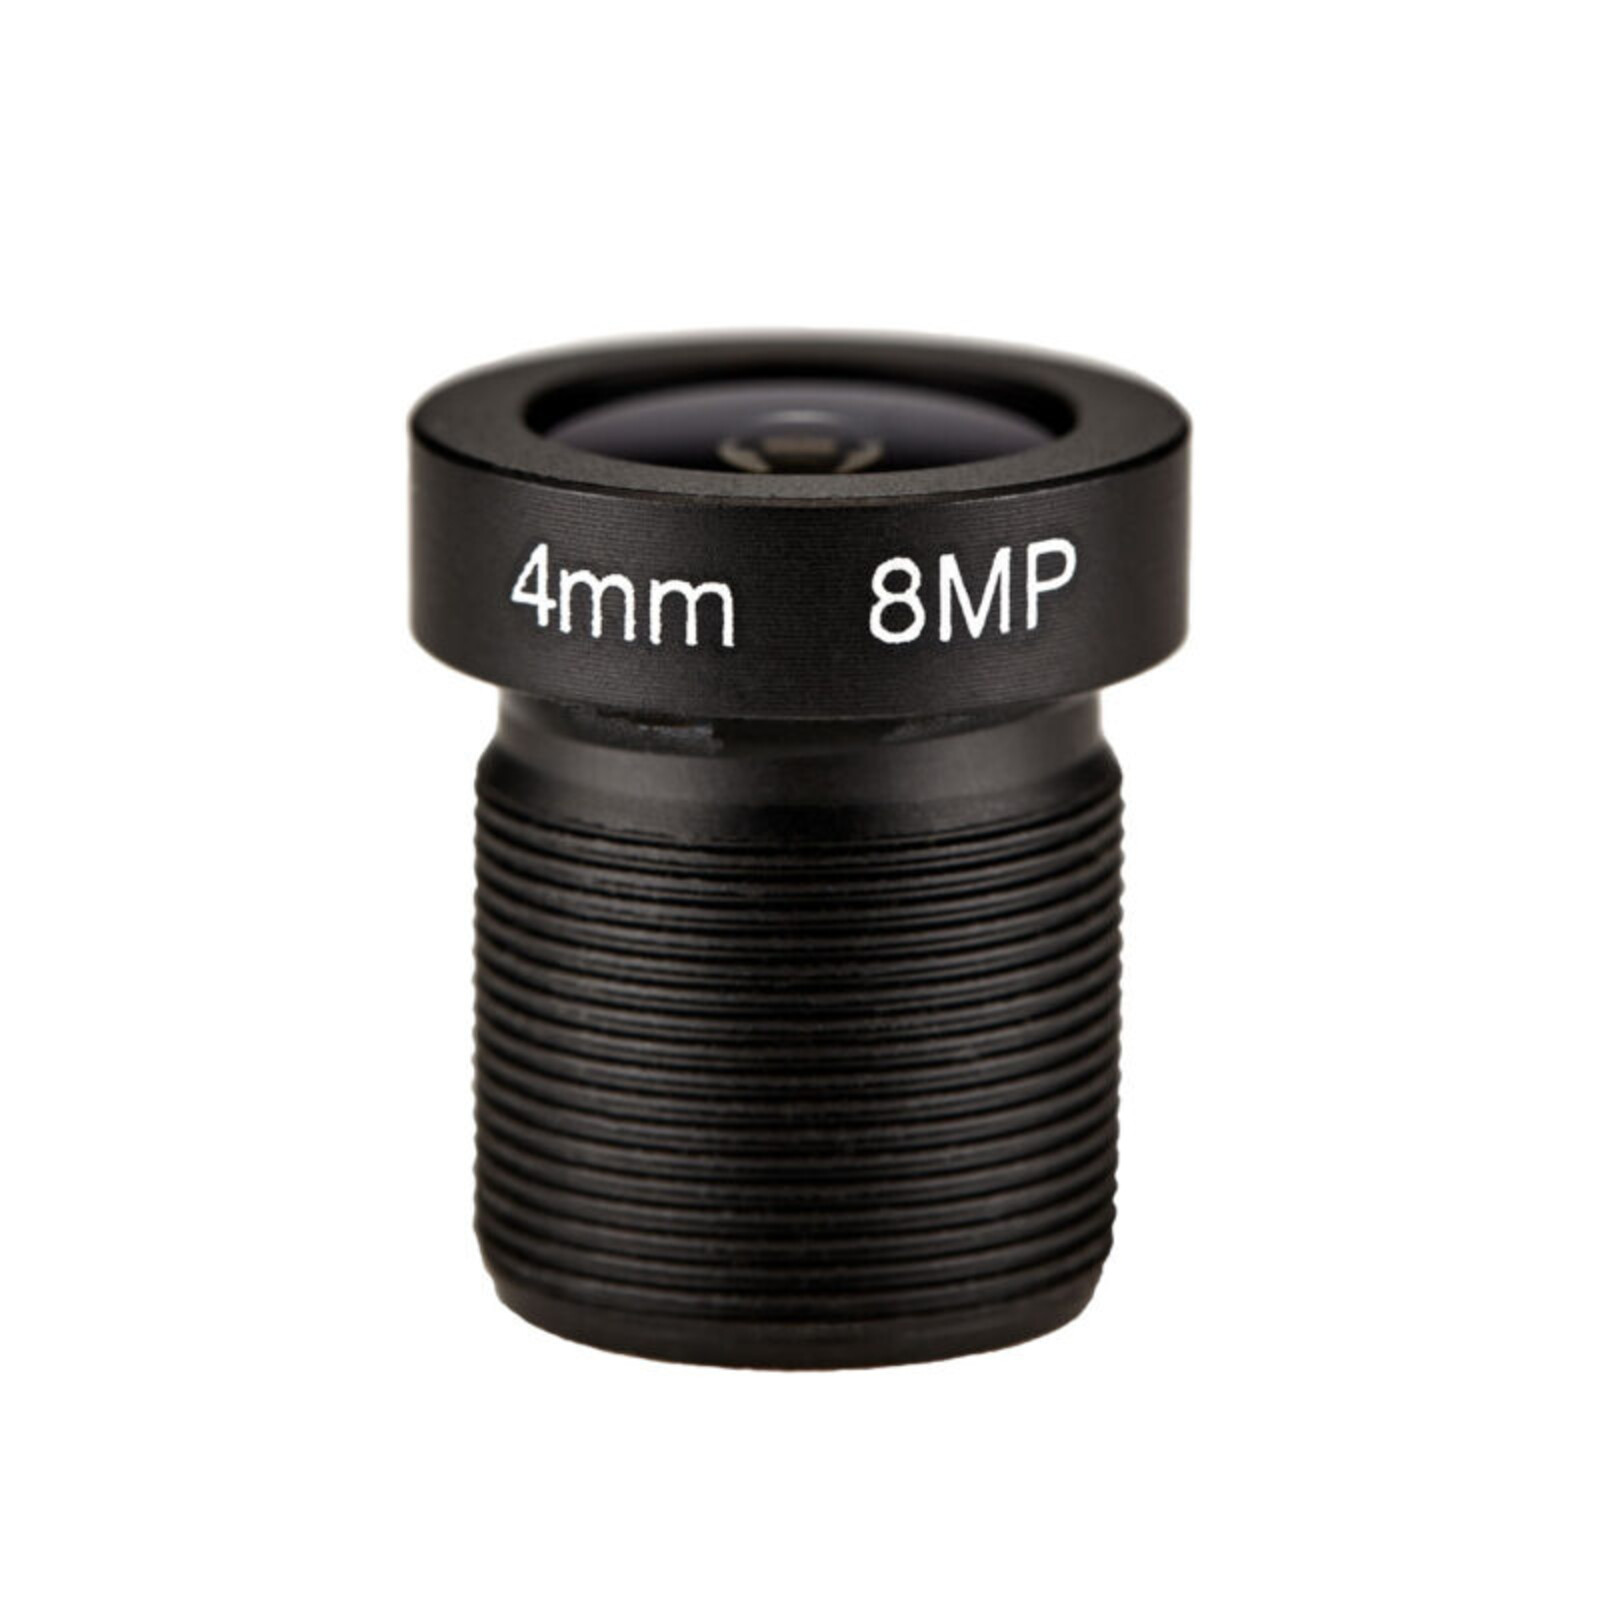 Marshall 4mm F1.8 8MP M12 Mount Lens (AOV approx. 85°)